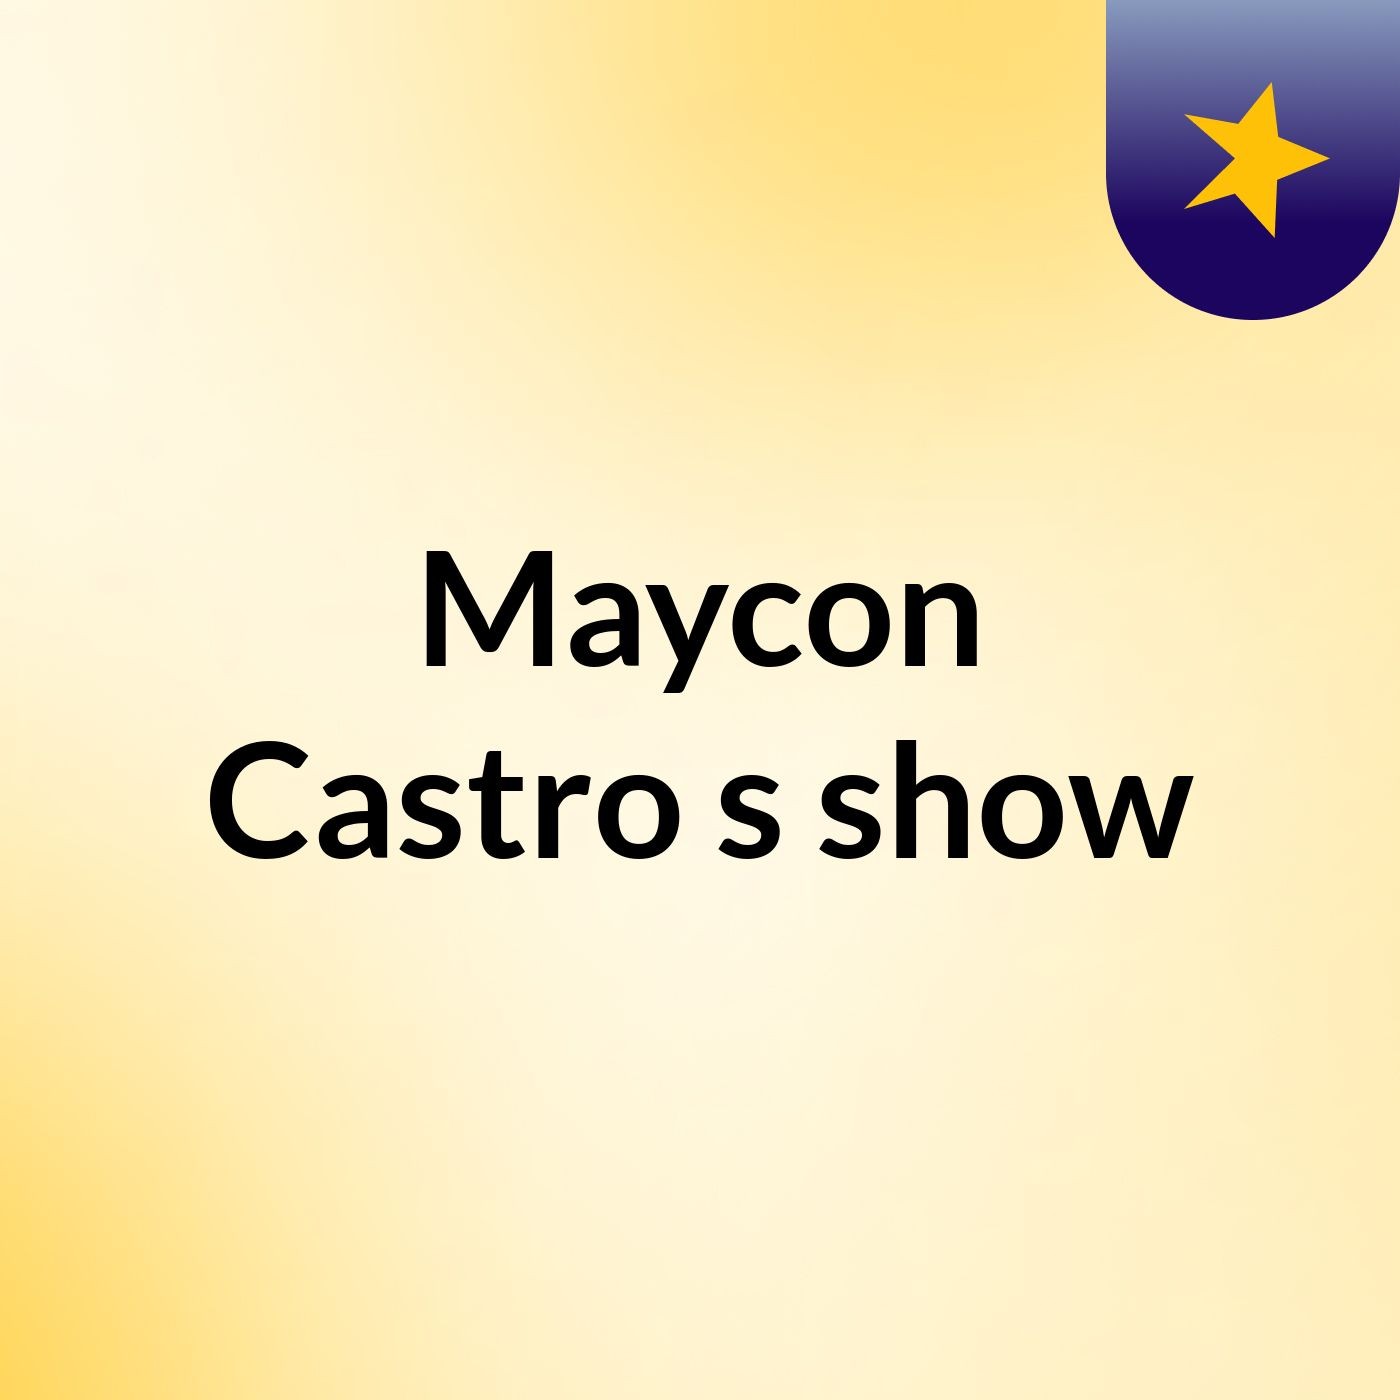 Maycon Castro's show